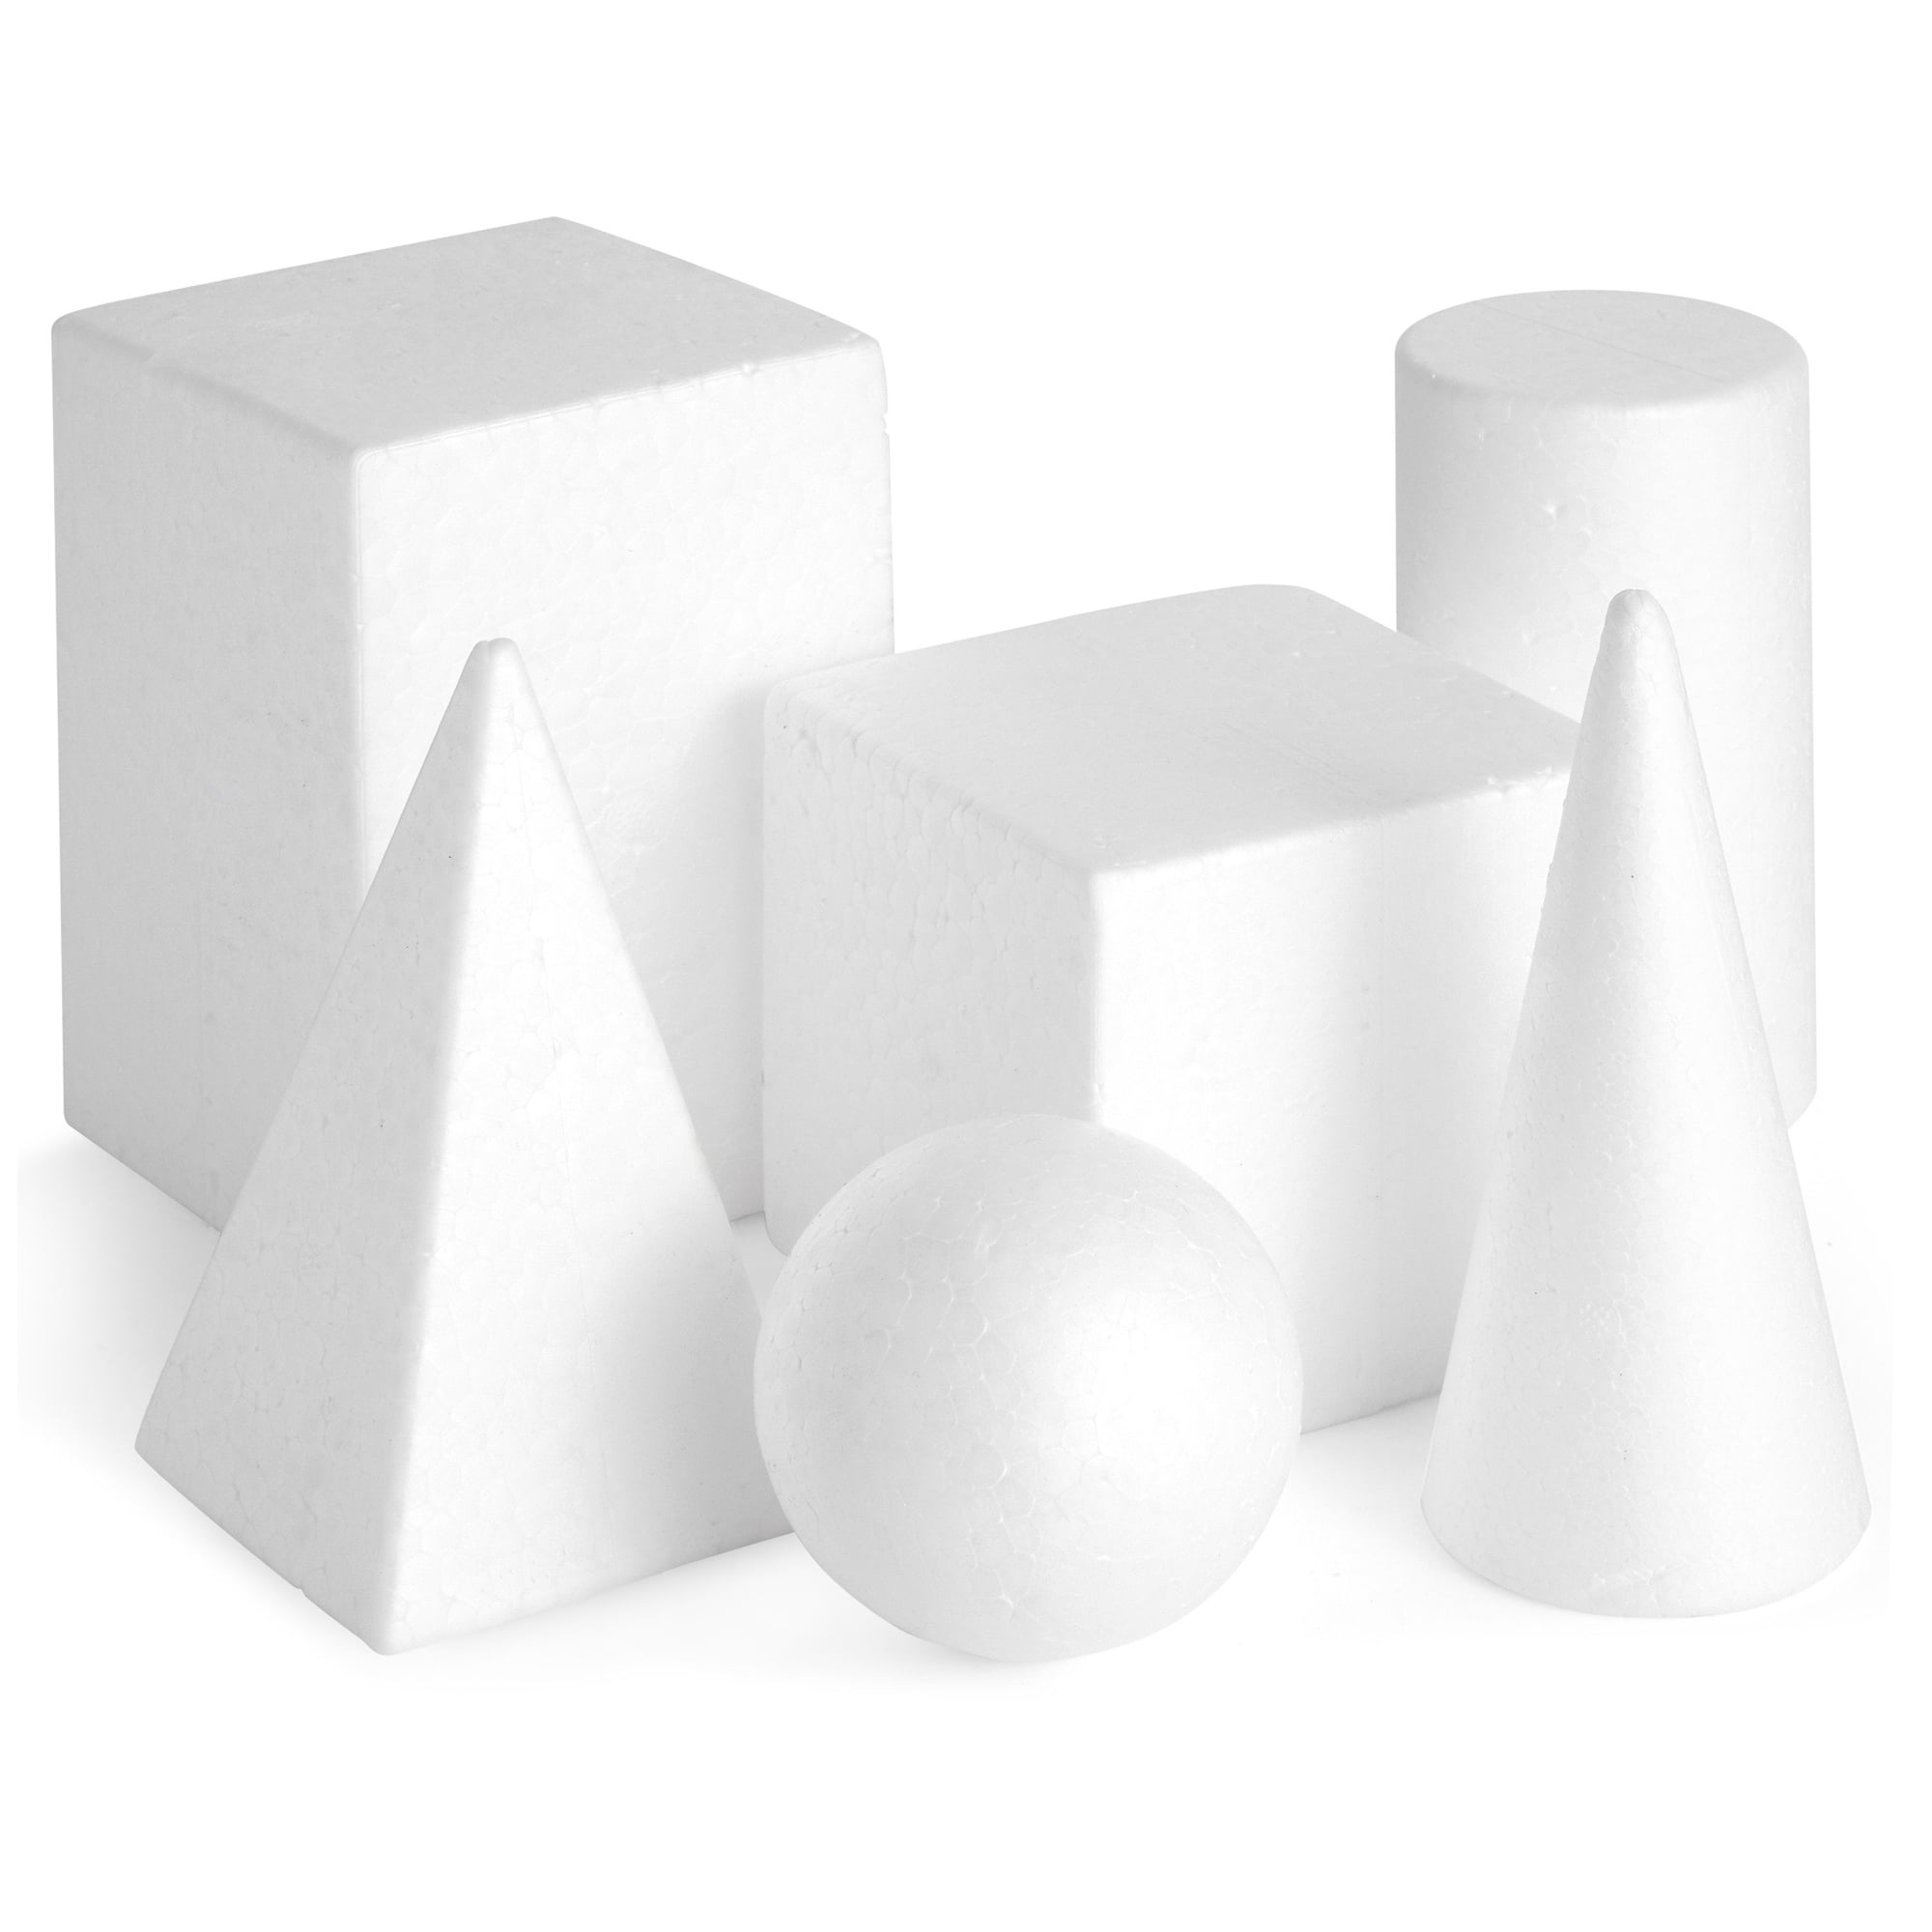  COHEALI 5pcs 1 Geometric Sponge Foam Shapes for Kids